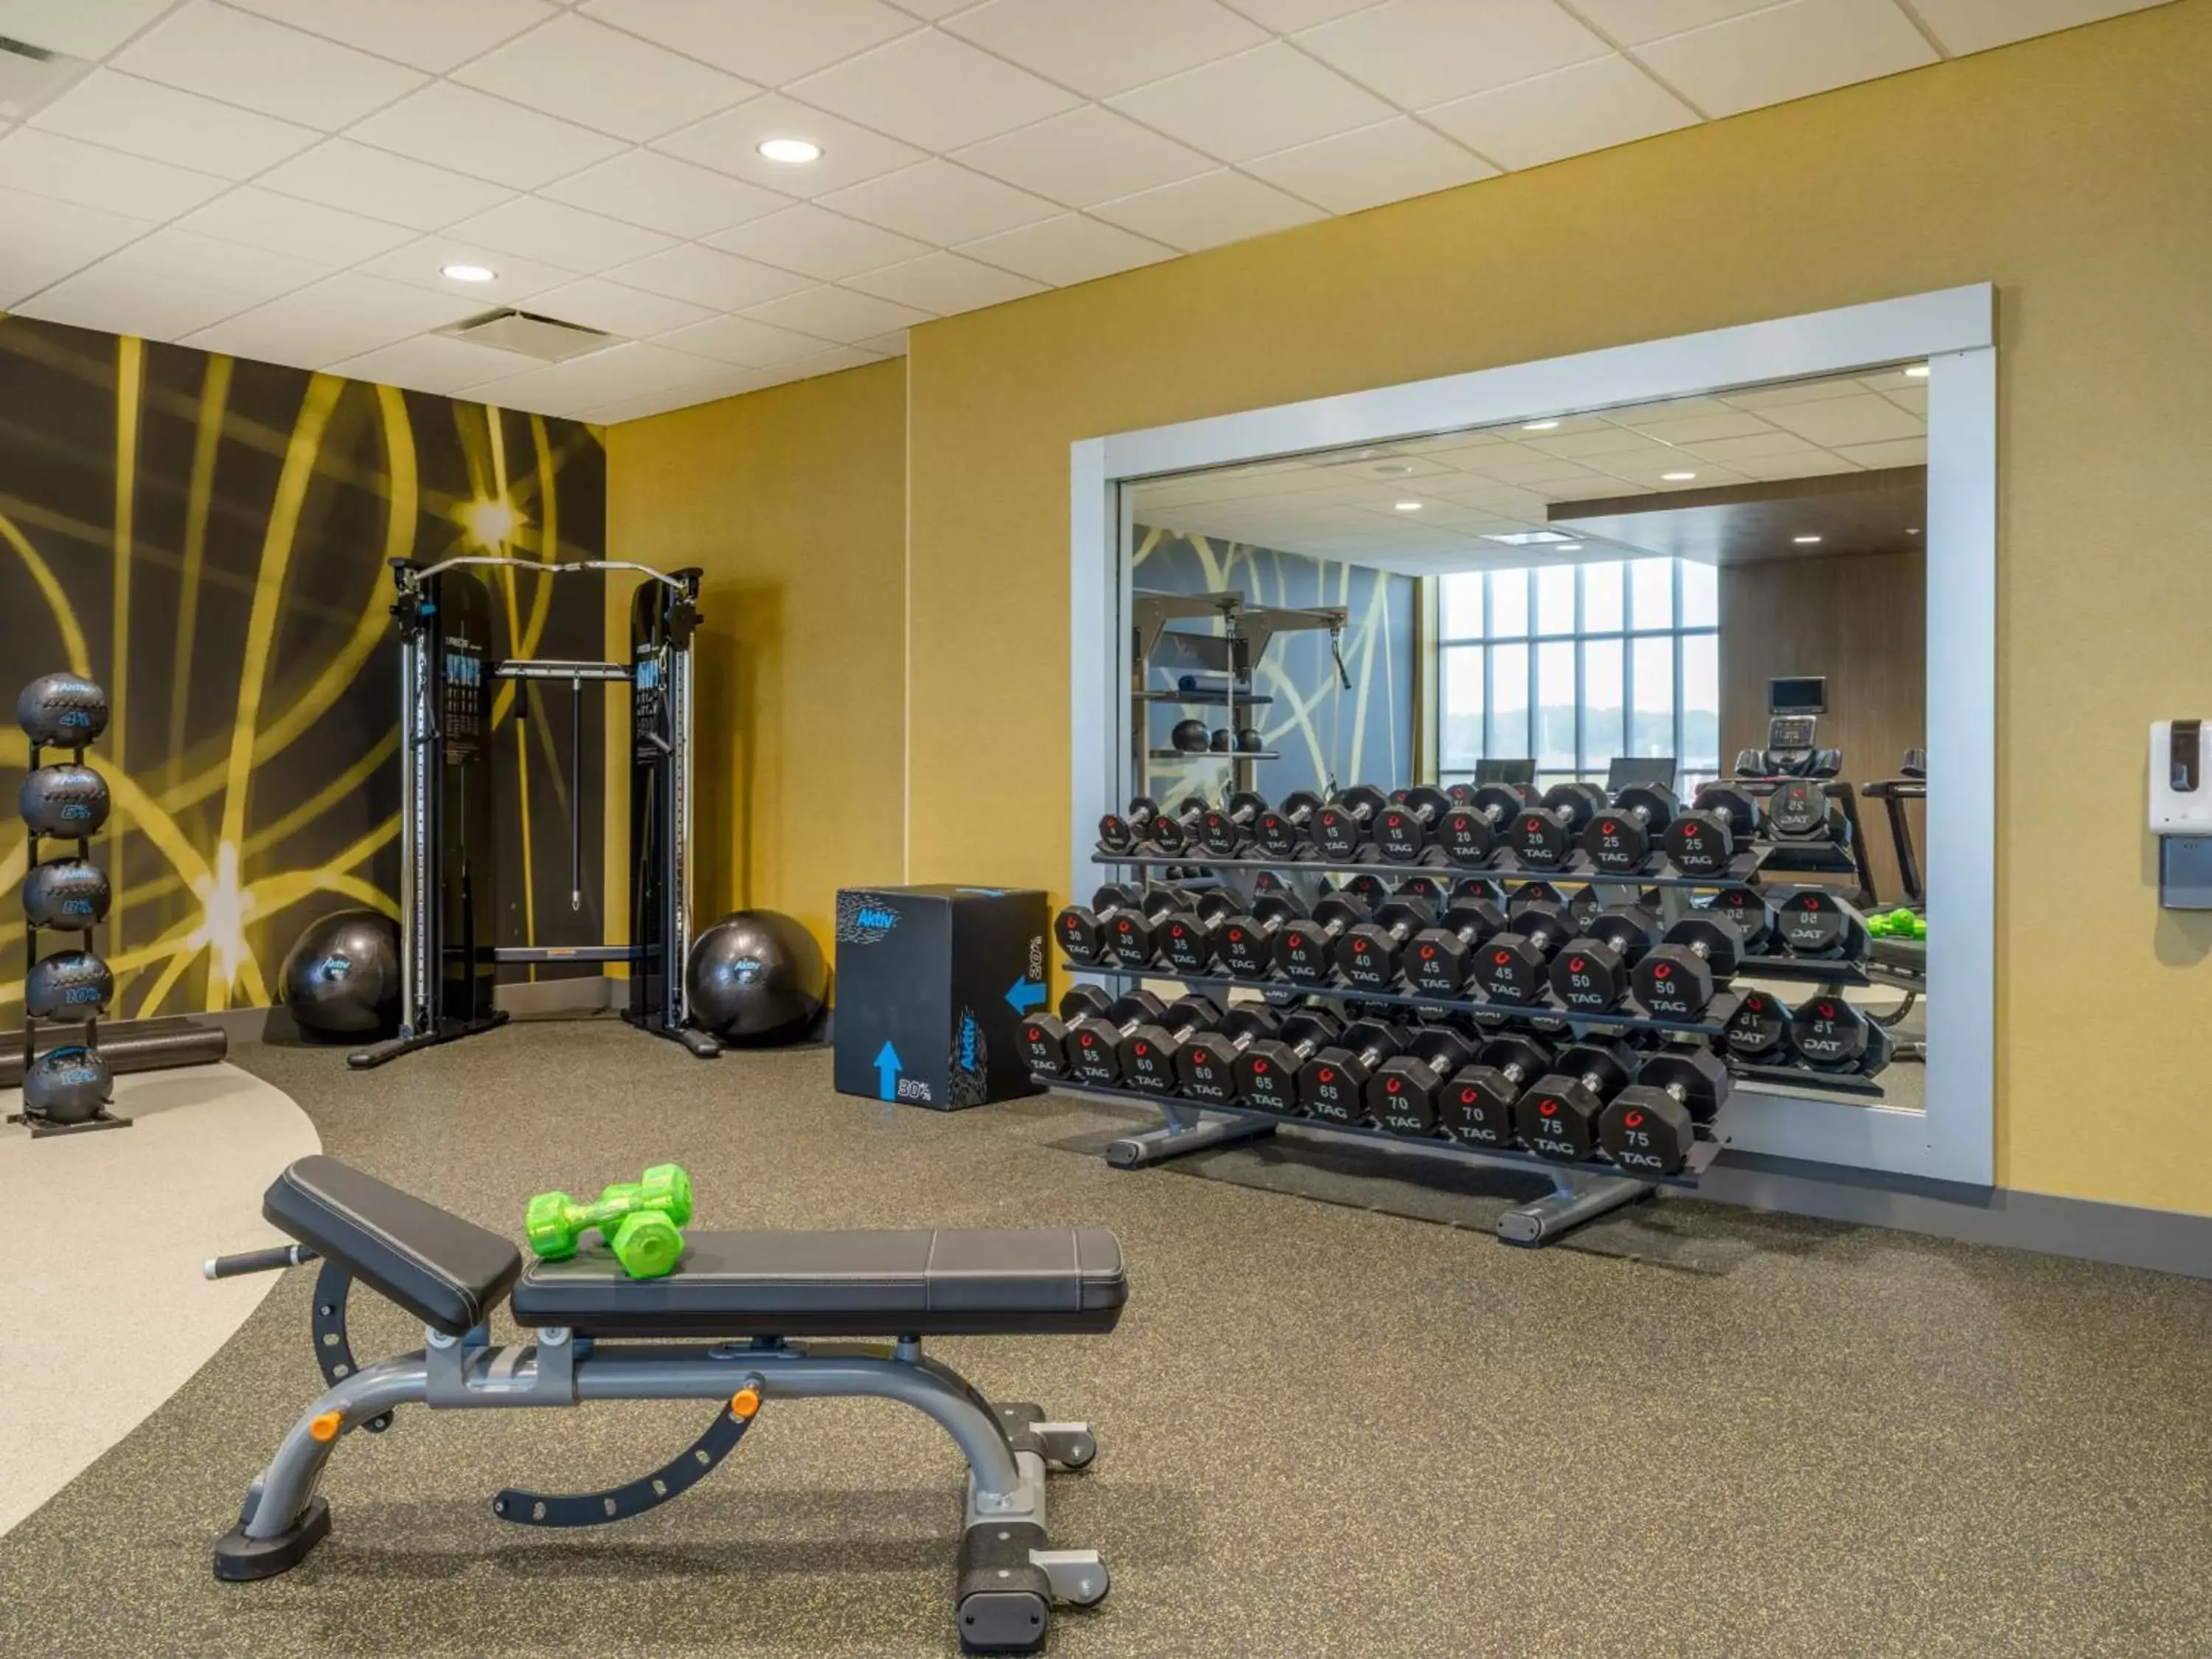 Fitness centre/facilities, Fitness Center/Facilities in Hilton Garden Inn Jeffersonville, In